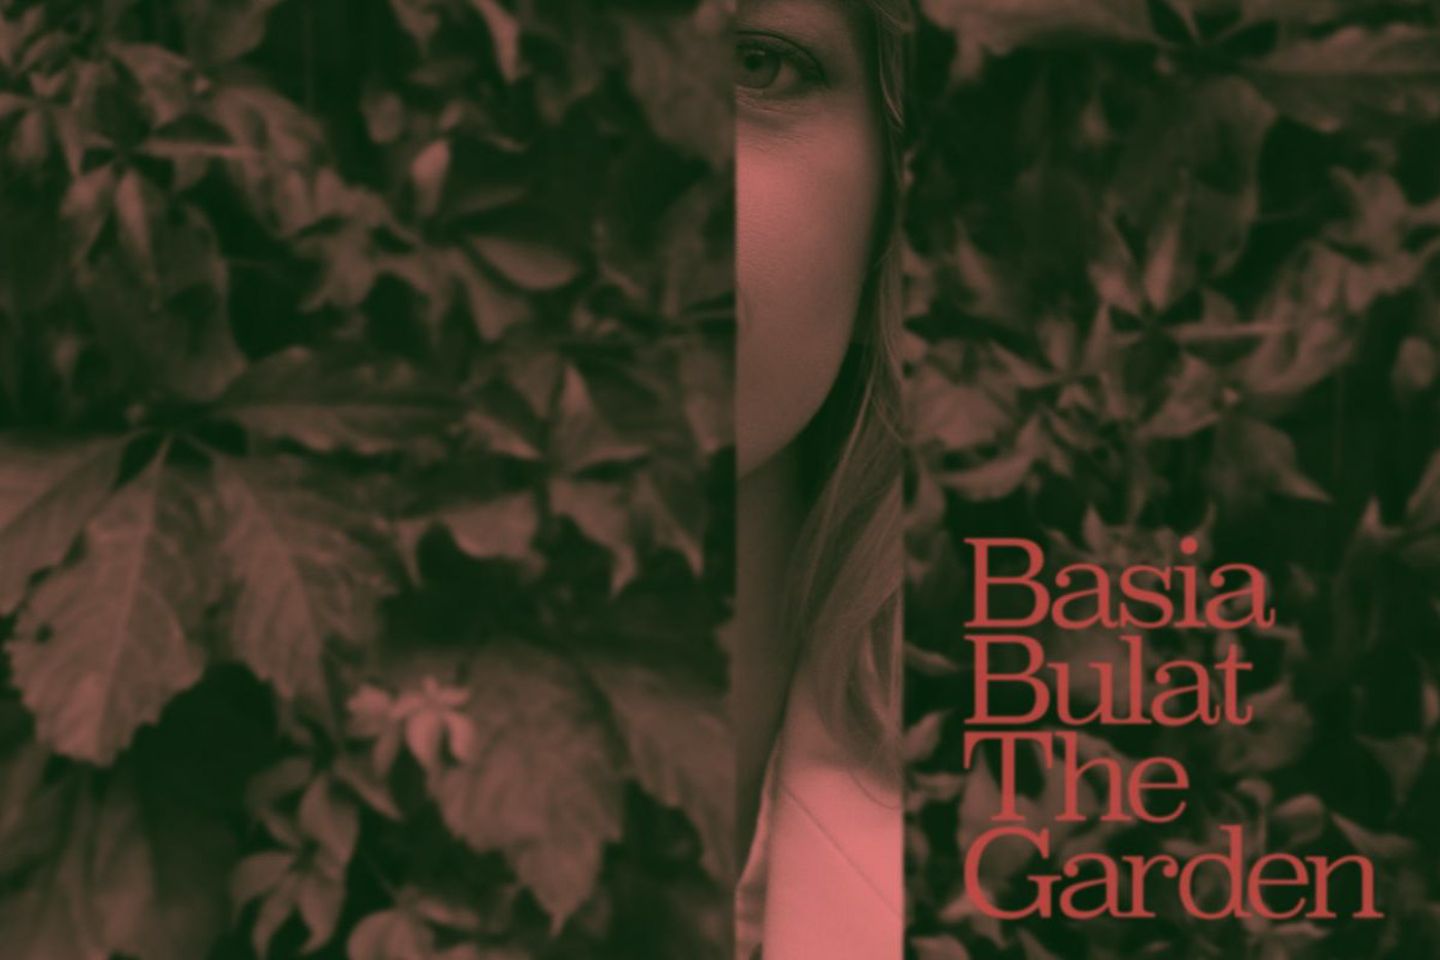 Basia Bulat “The Garden” (Secret City Records, 2022)